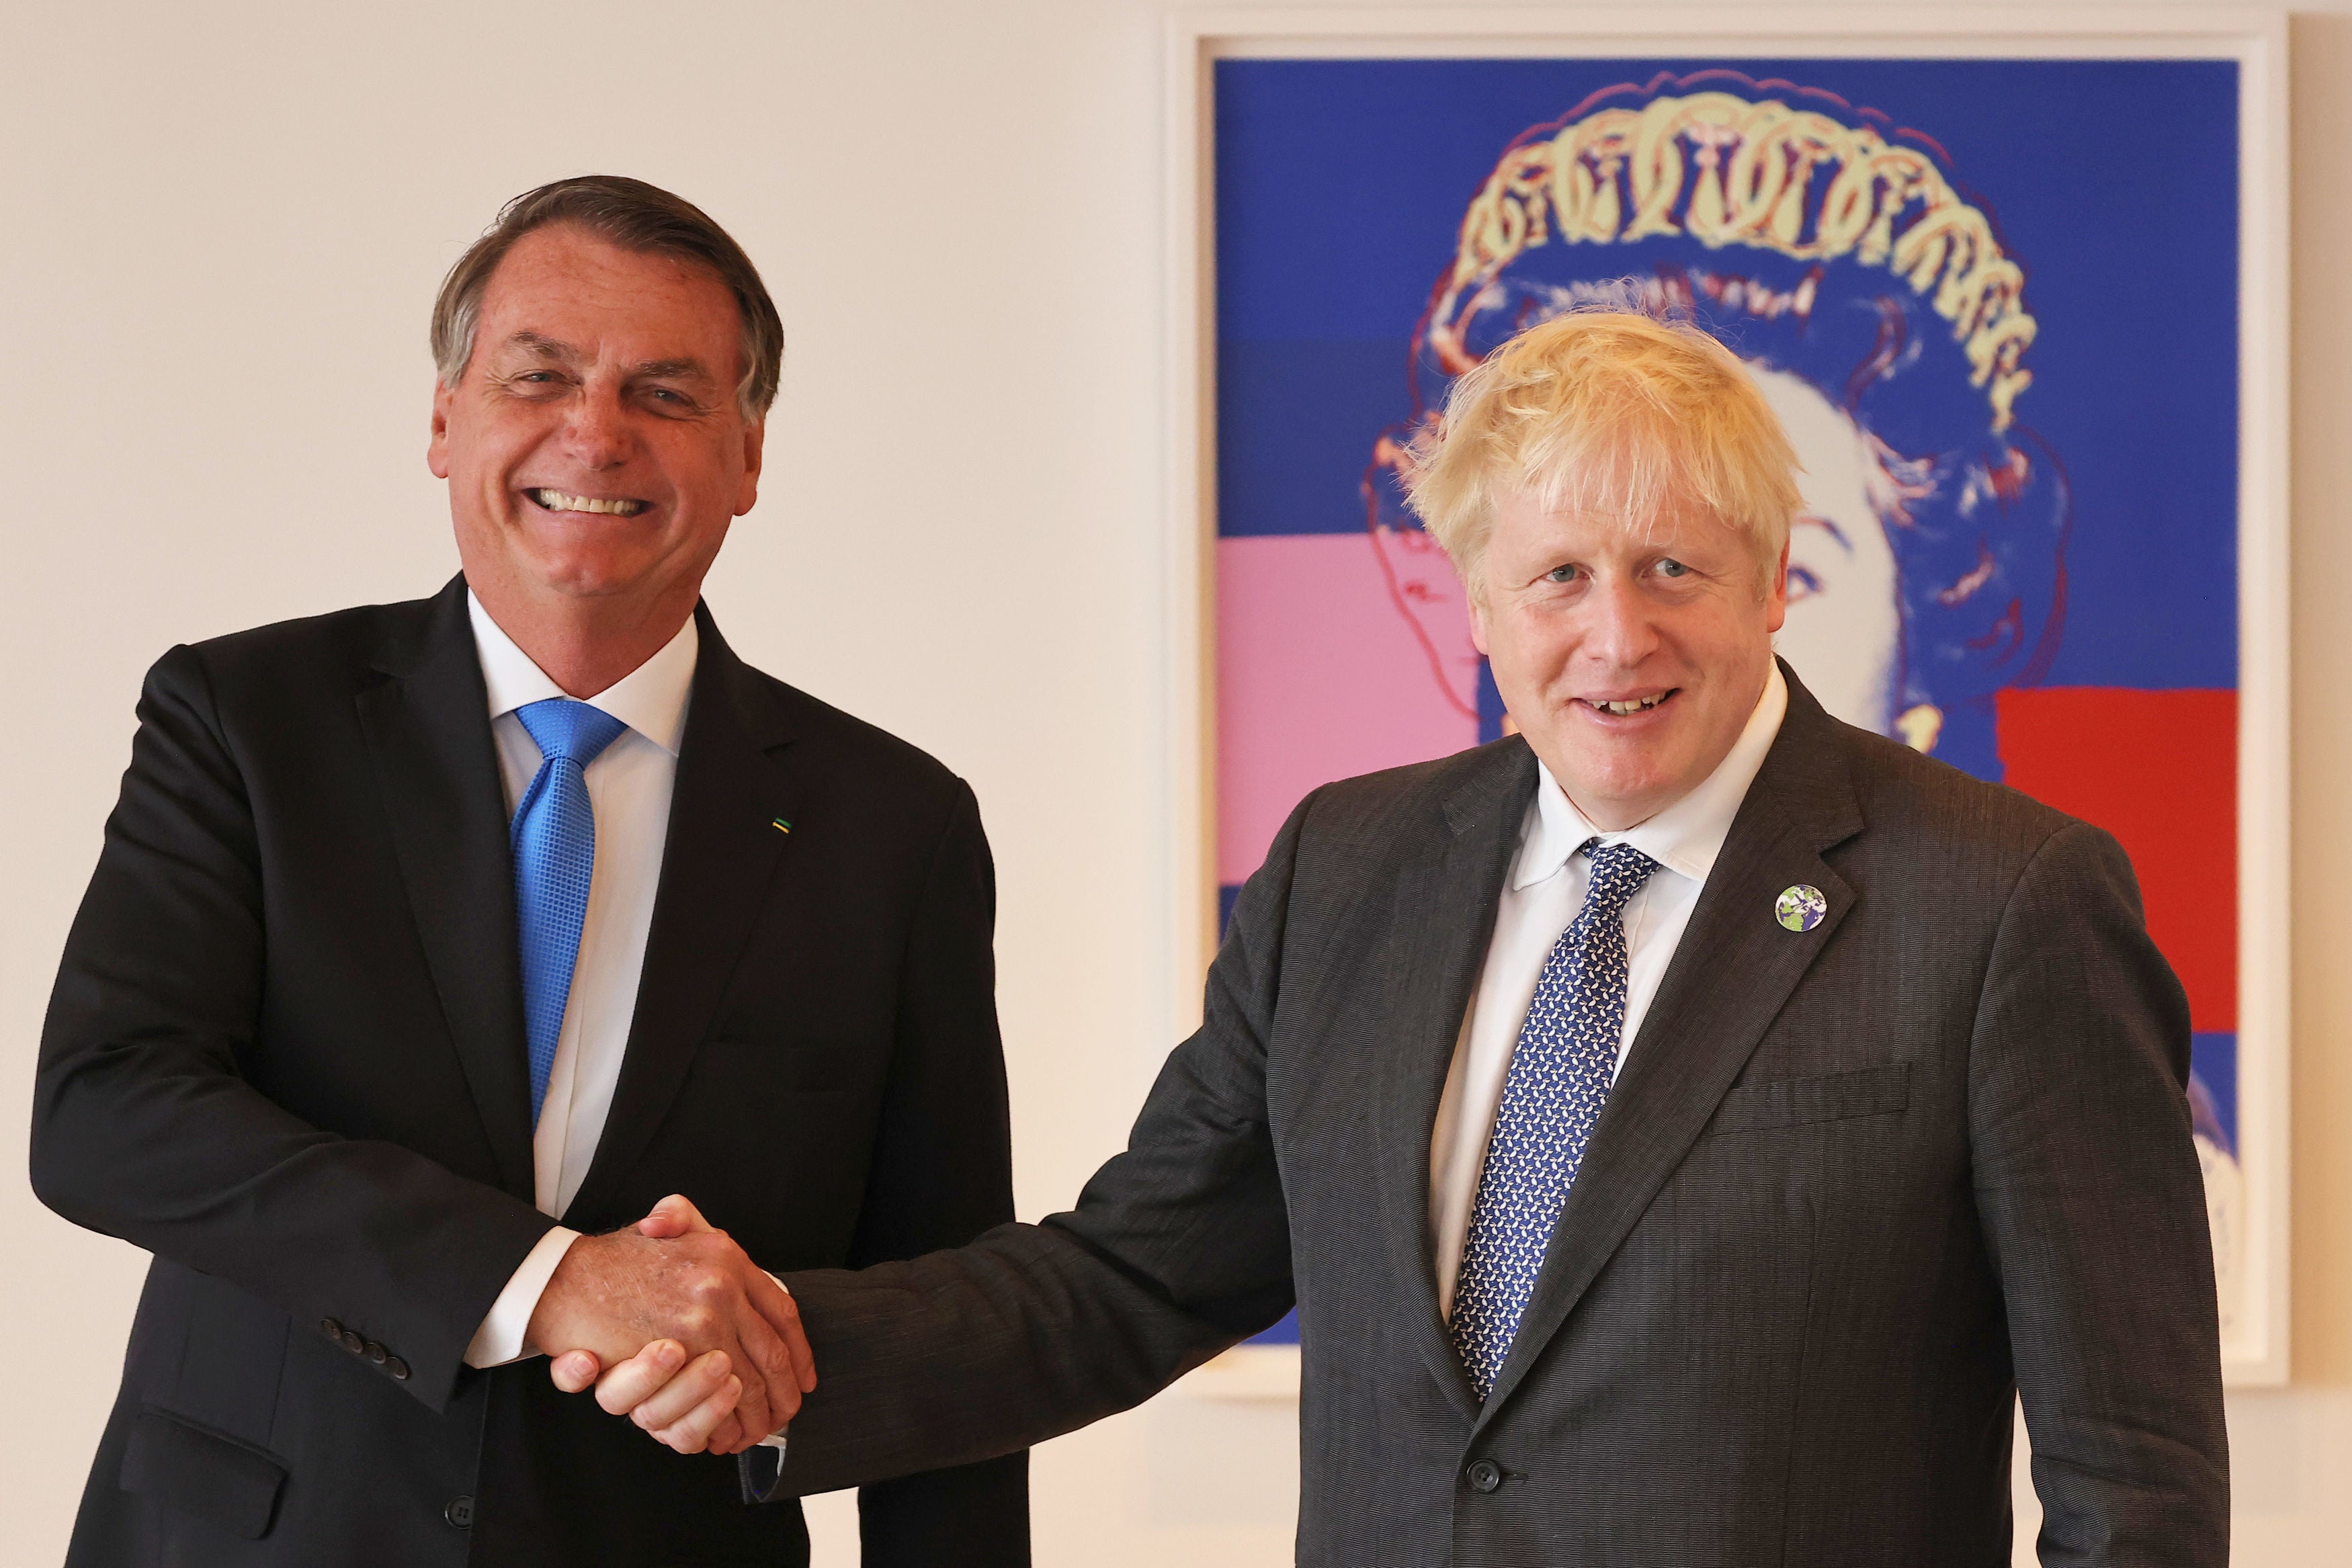 Boris Johnson shakes hands with Brazil’s president Jair Bolsonaro ahead of a bilateral meeting at the UK diplomatic residence in New York